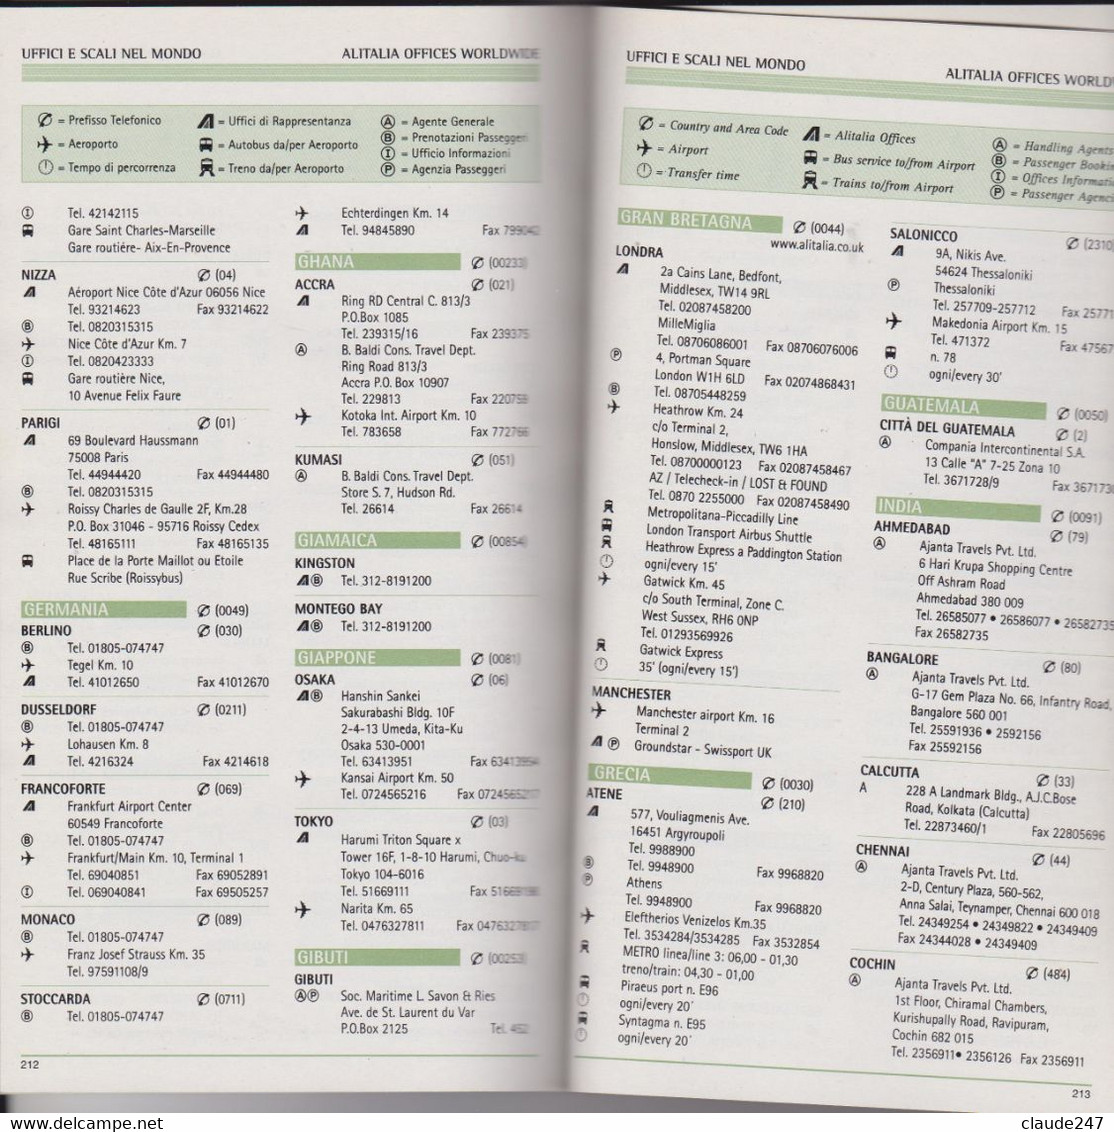 Alitalia Easy Timetable - Orario Generale Periodo Oct 31 2004 26 Mar 2005 - Horarios